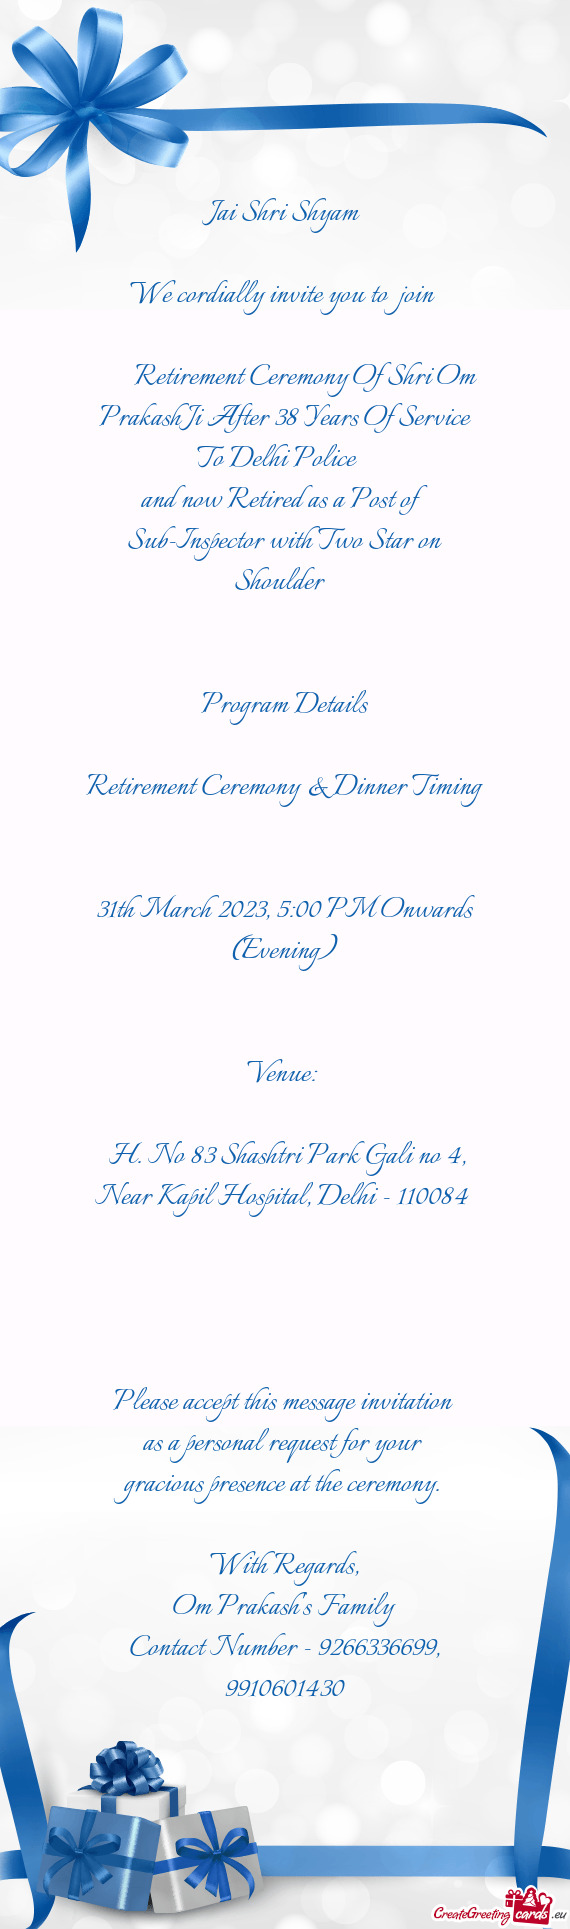 Retirement Ceremony Of Shri Om Prakash Ji After 38 Years Of Service To Delhi Police